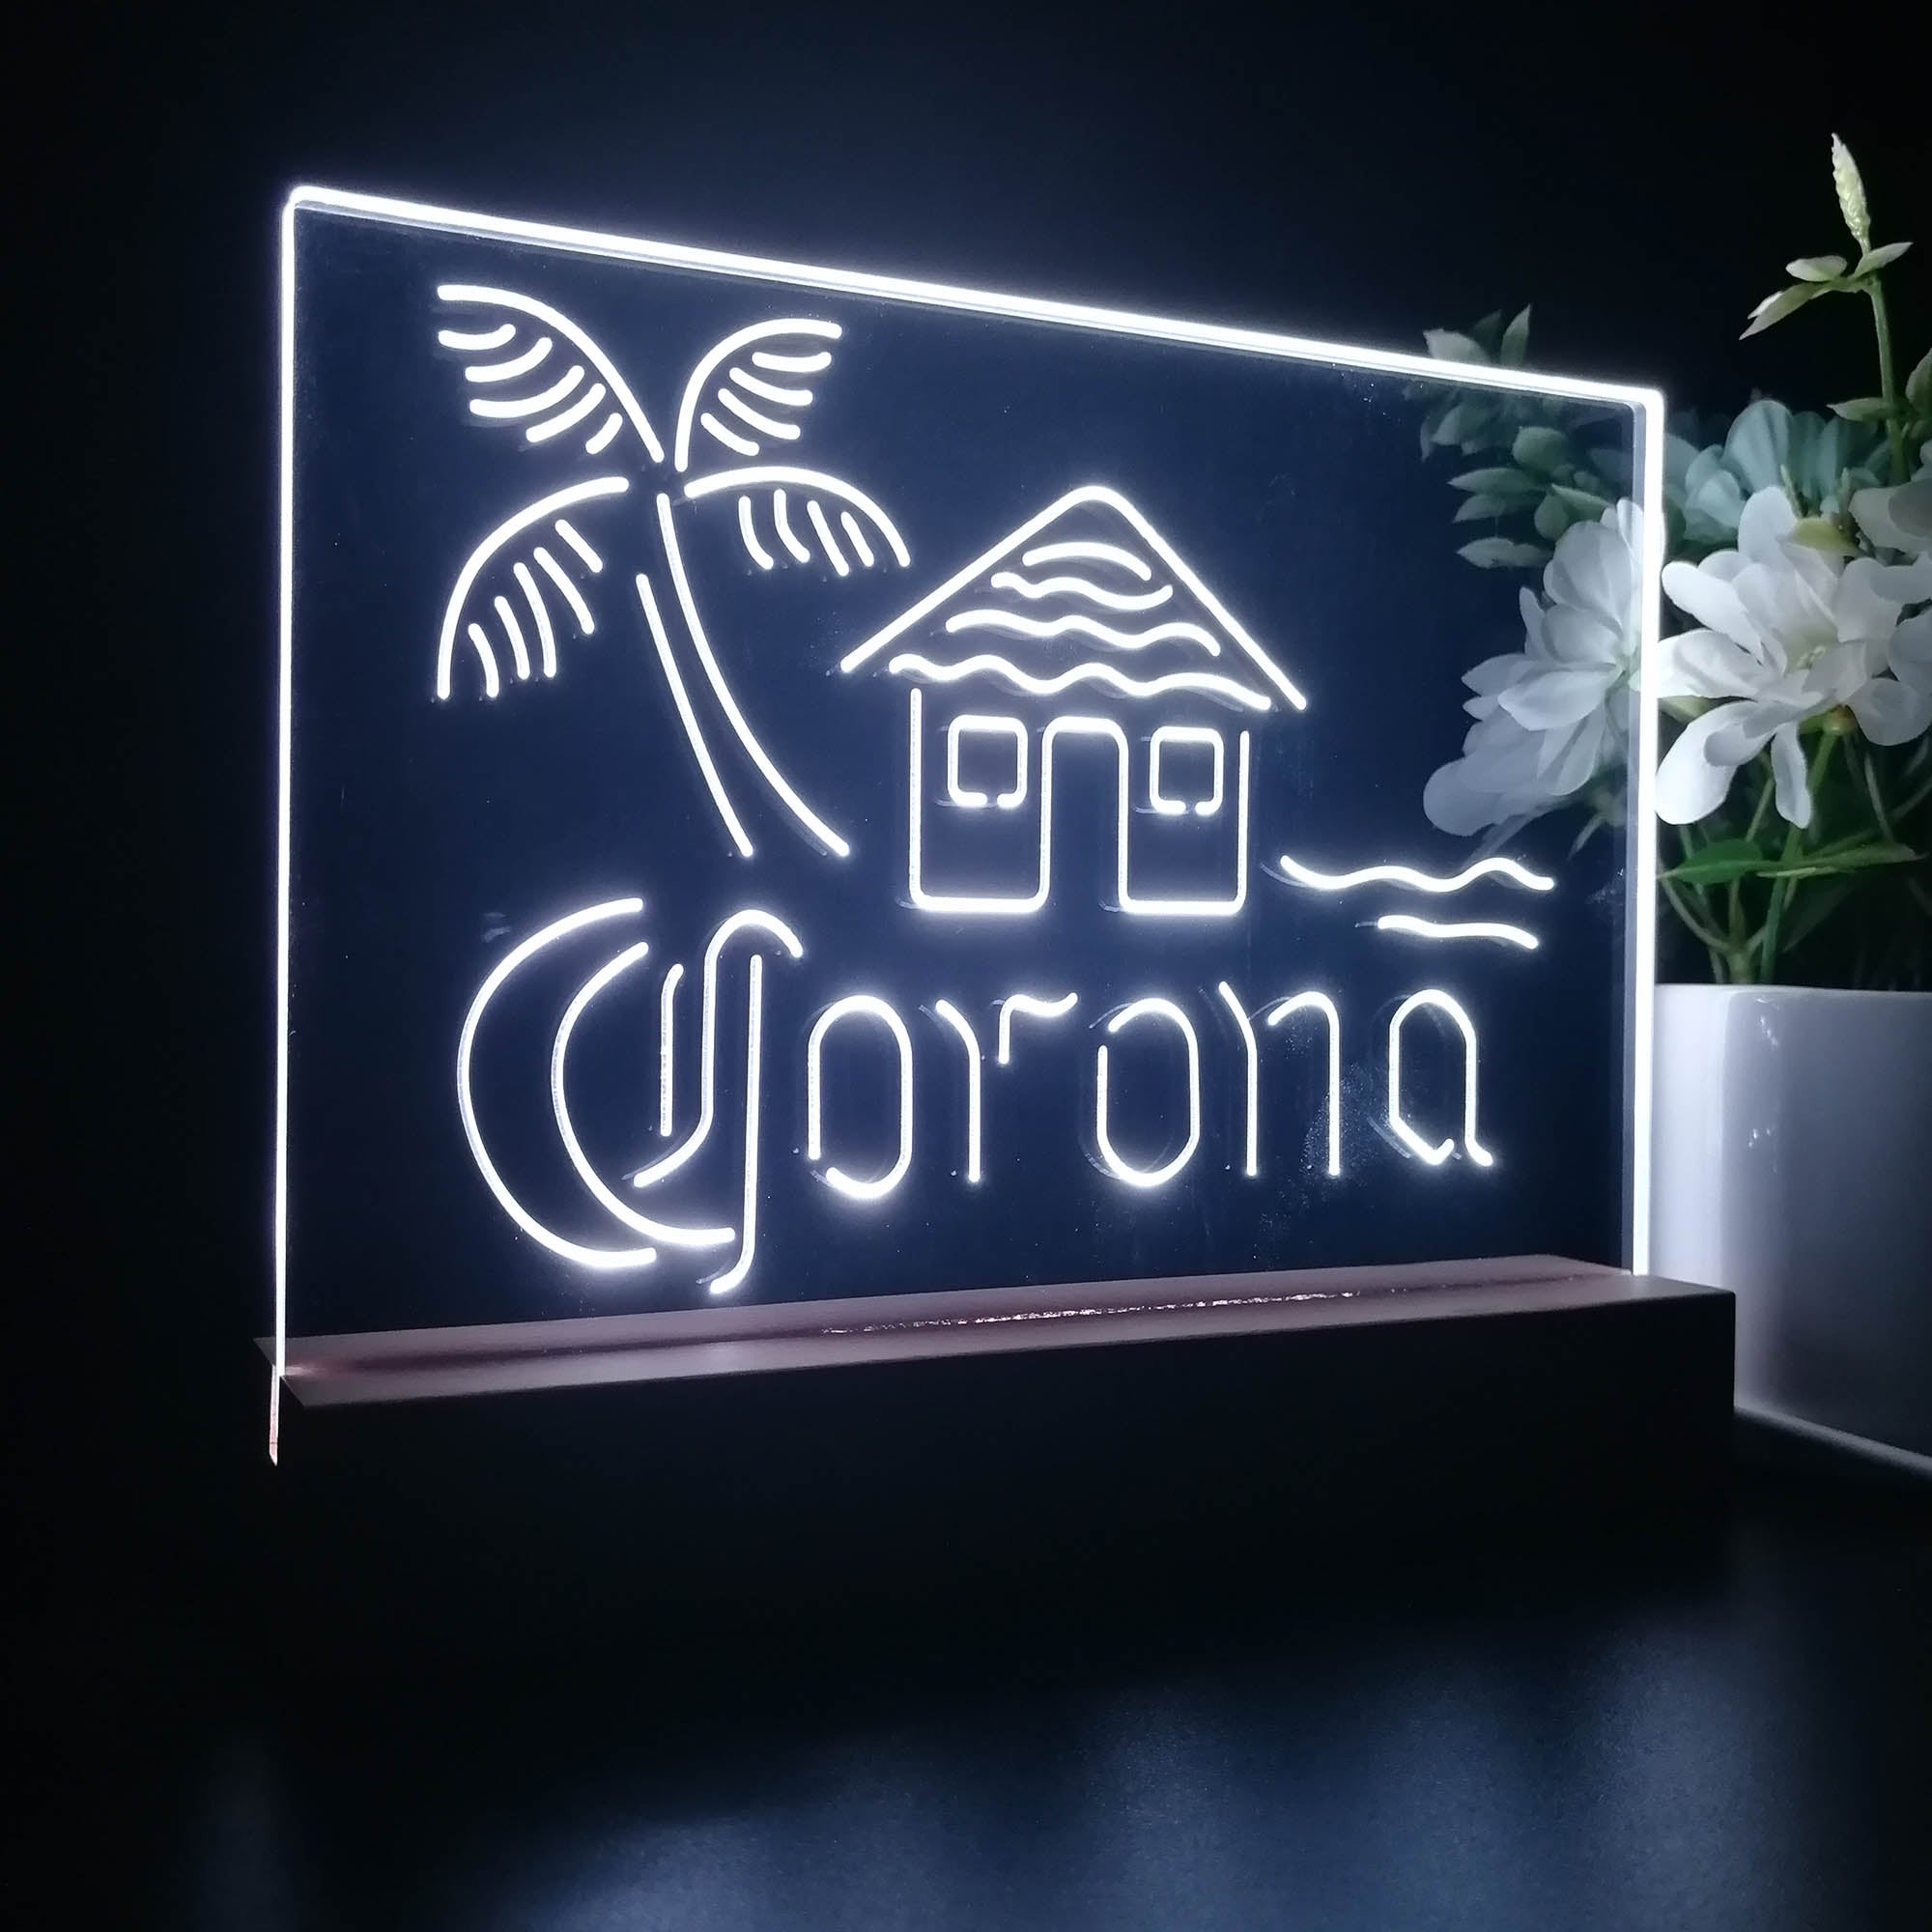 Coronas Cabin Island Palm Tree Night Light LED Sign